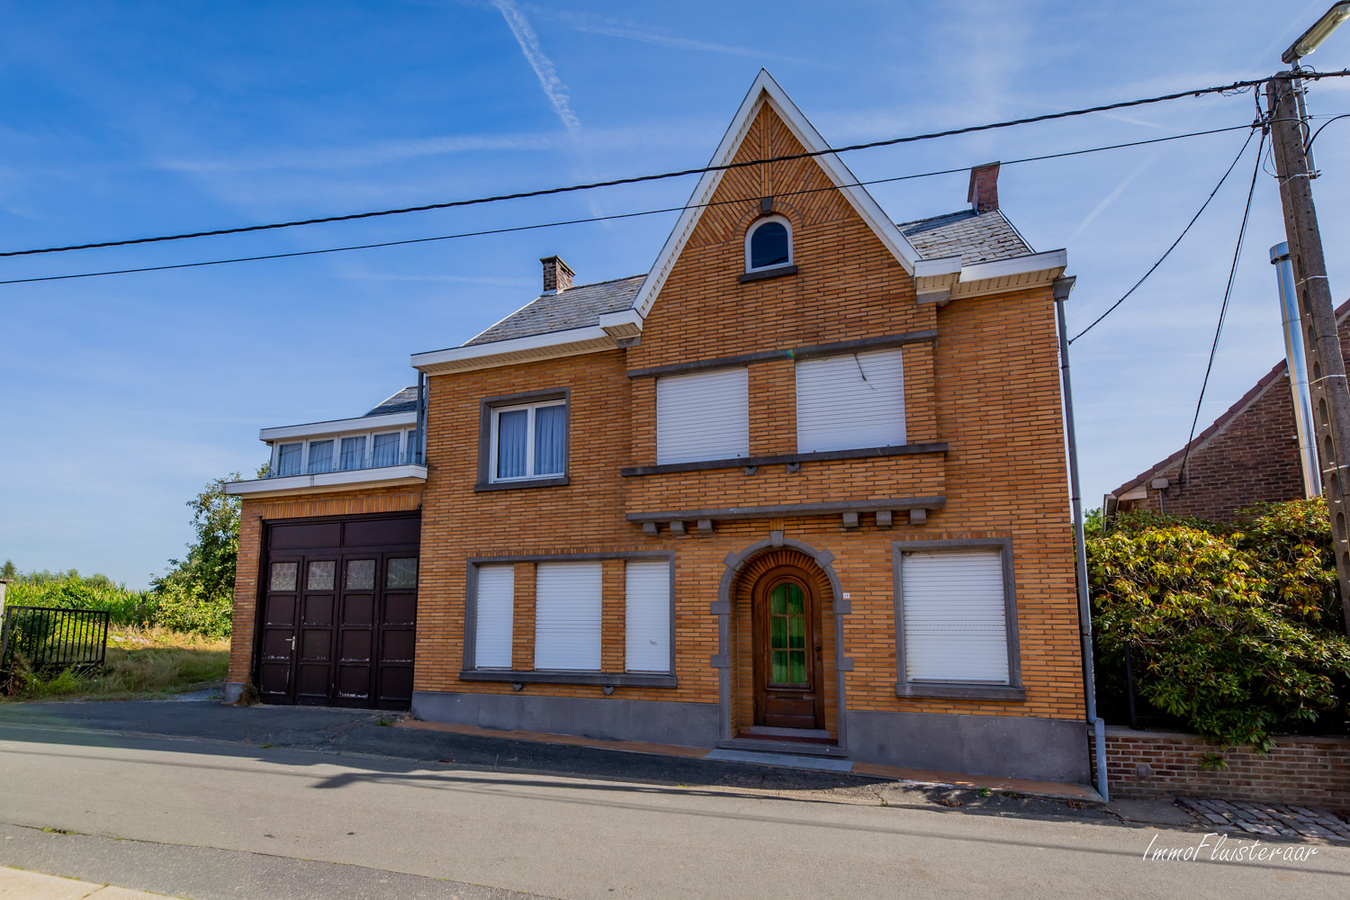 Property for sale in Zottegem